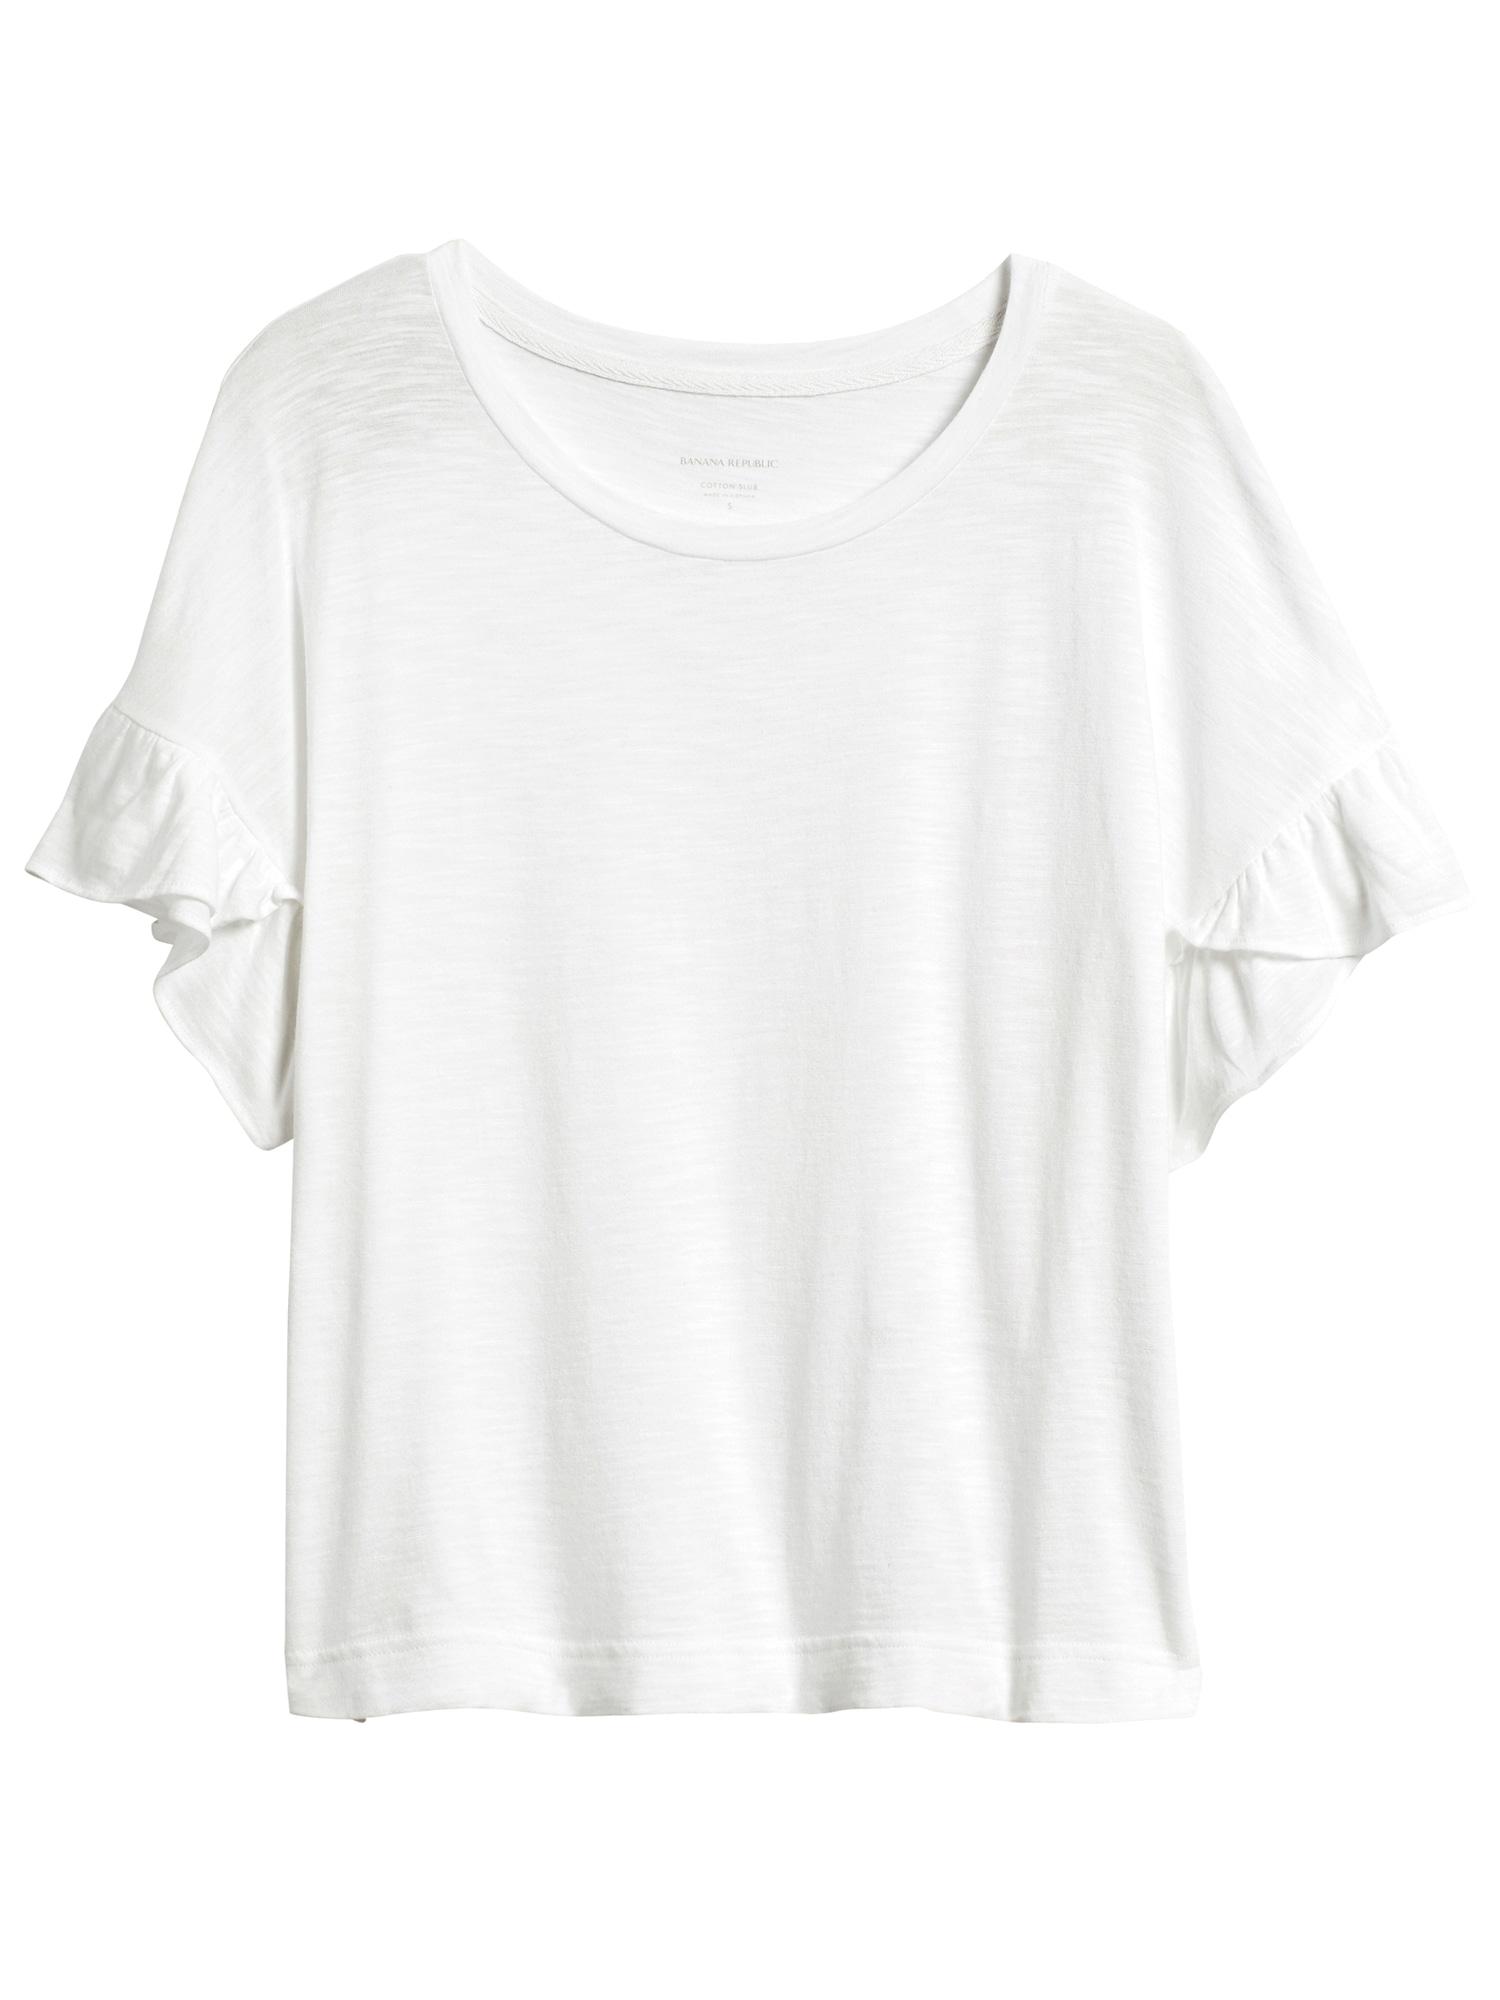 Banana Republic Slub Cotton-modal Ruffled T-shirt in White - Save 51% ...